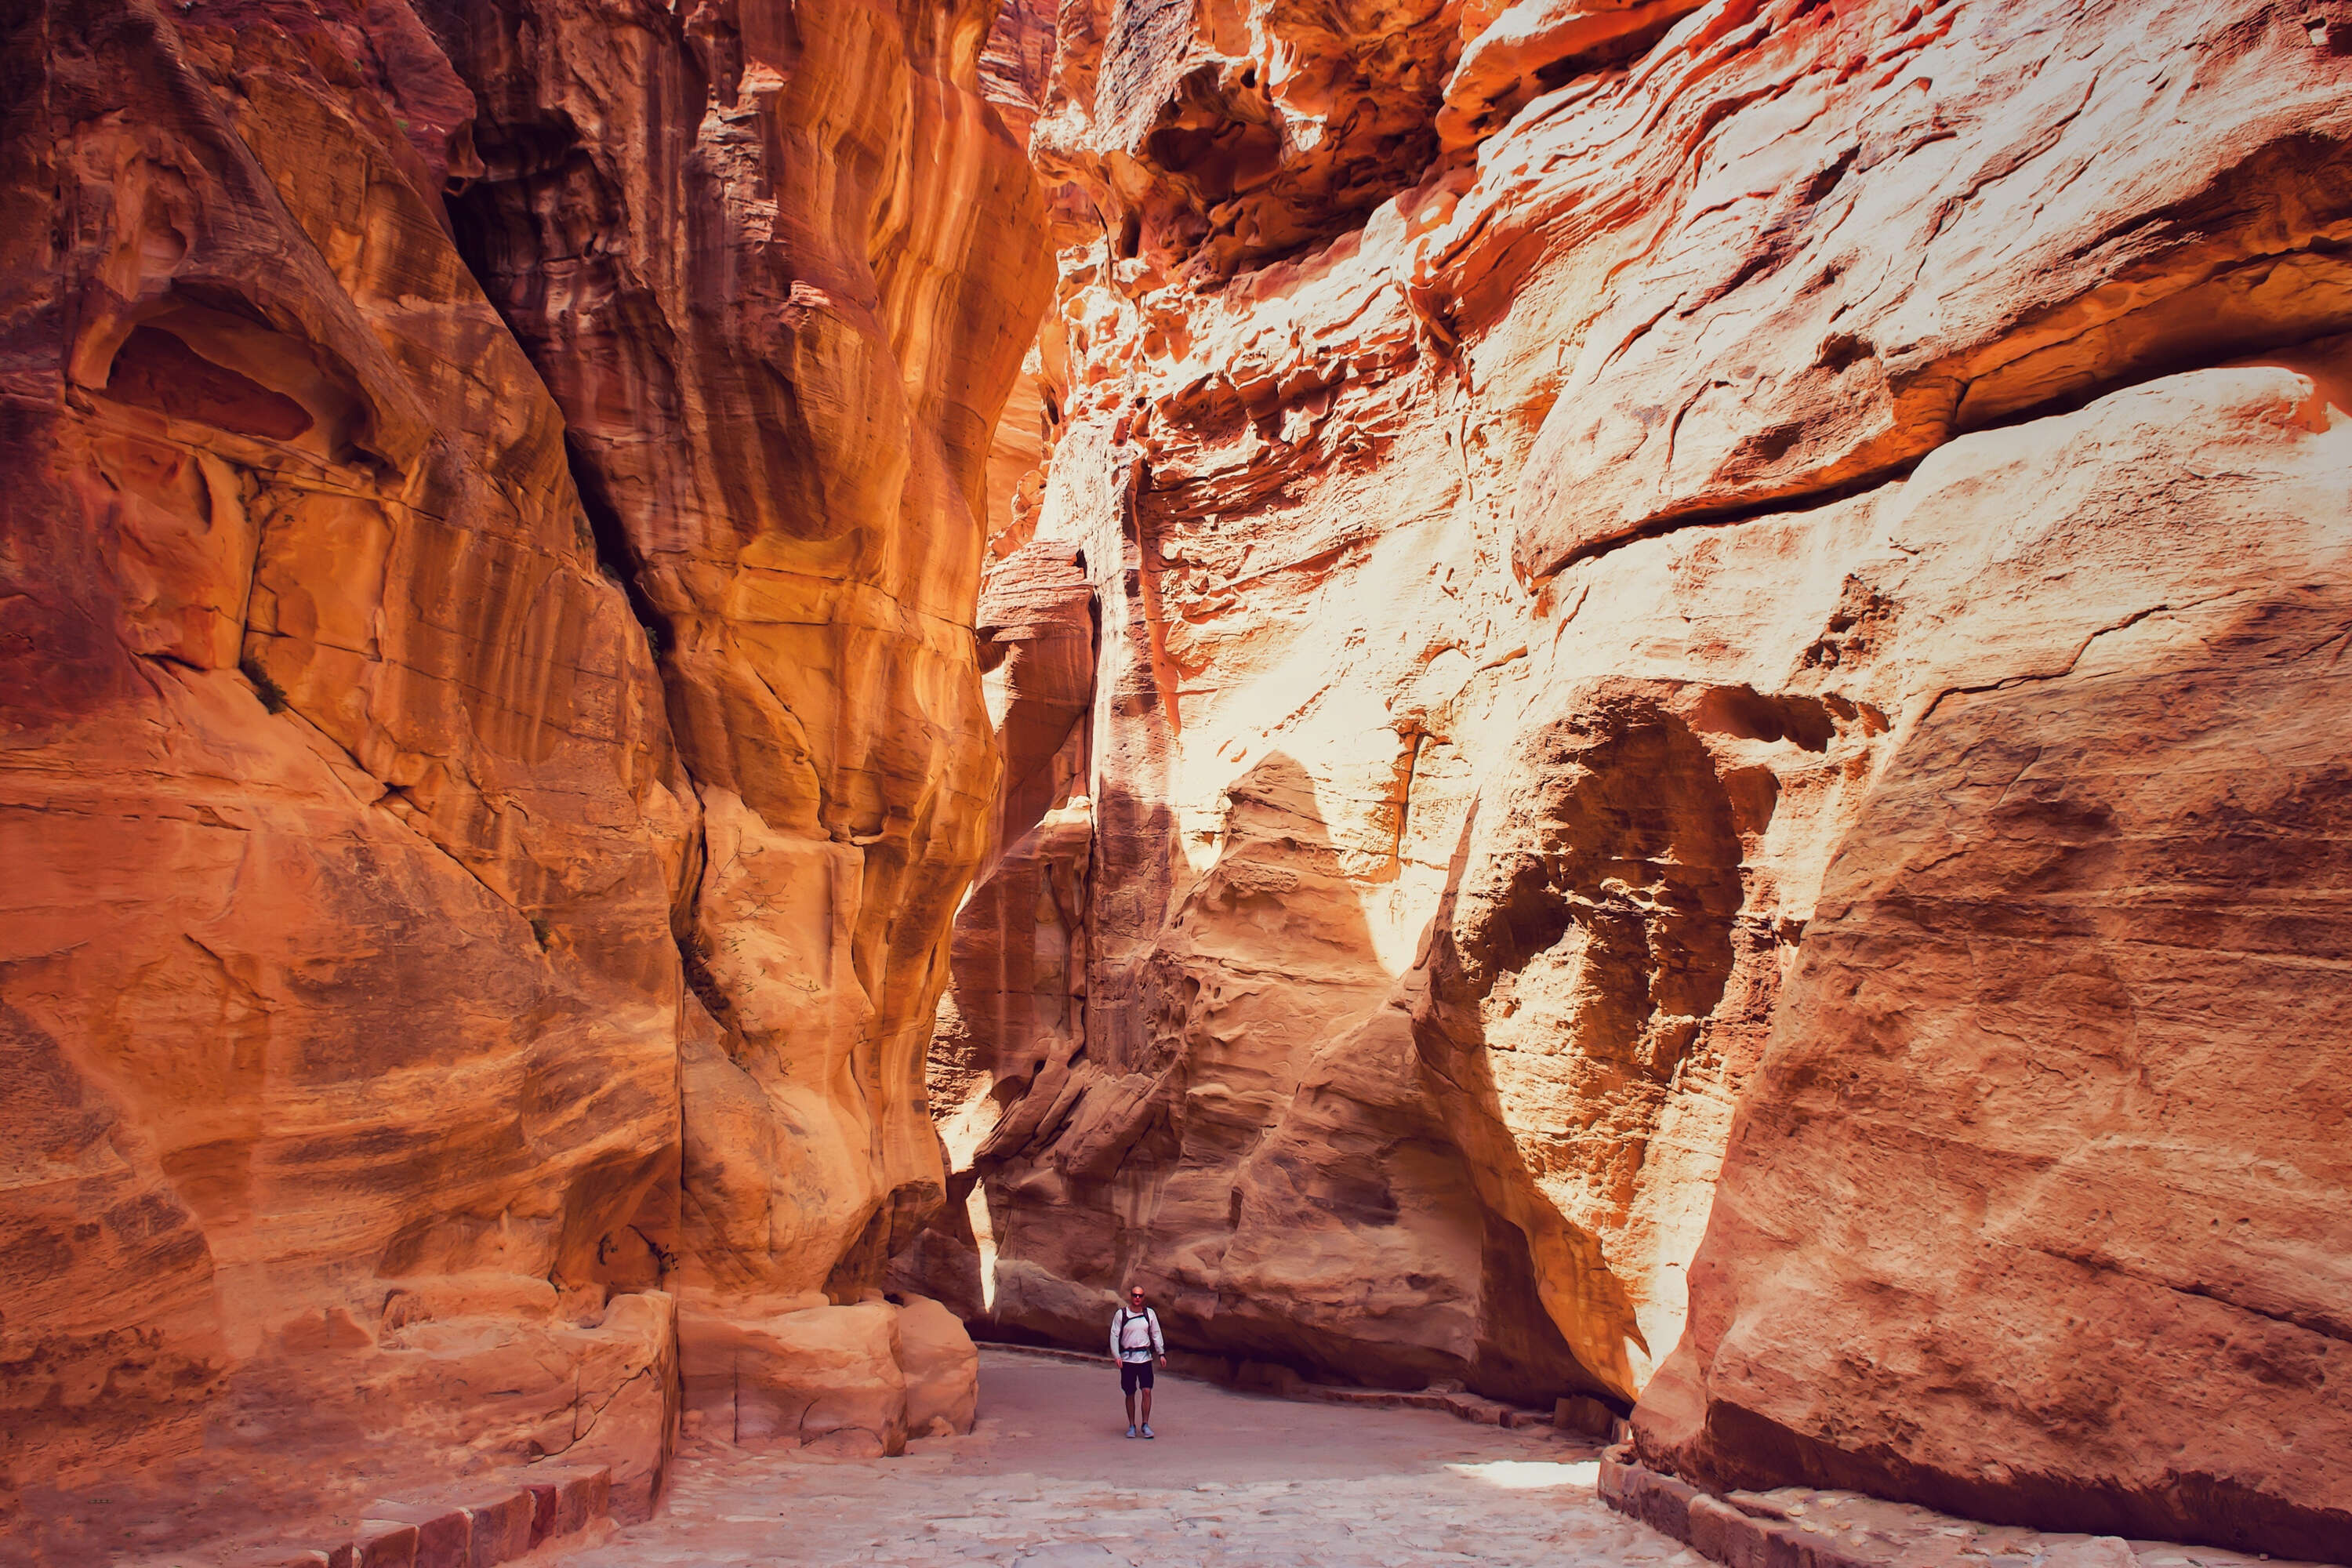 Rock formations in Jordan